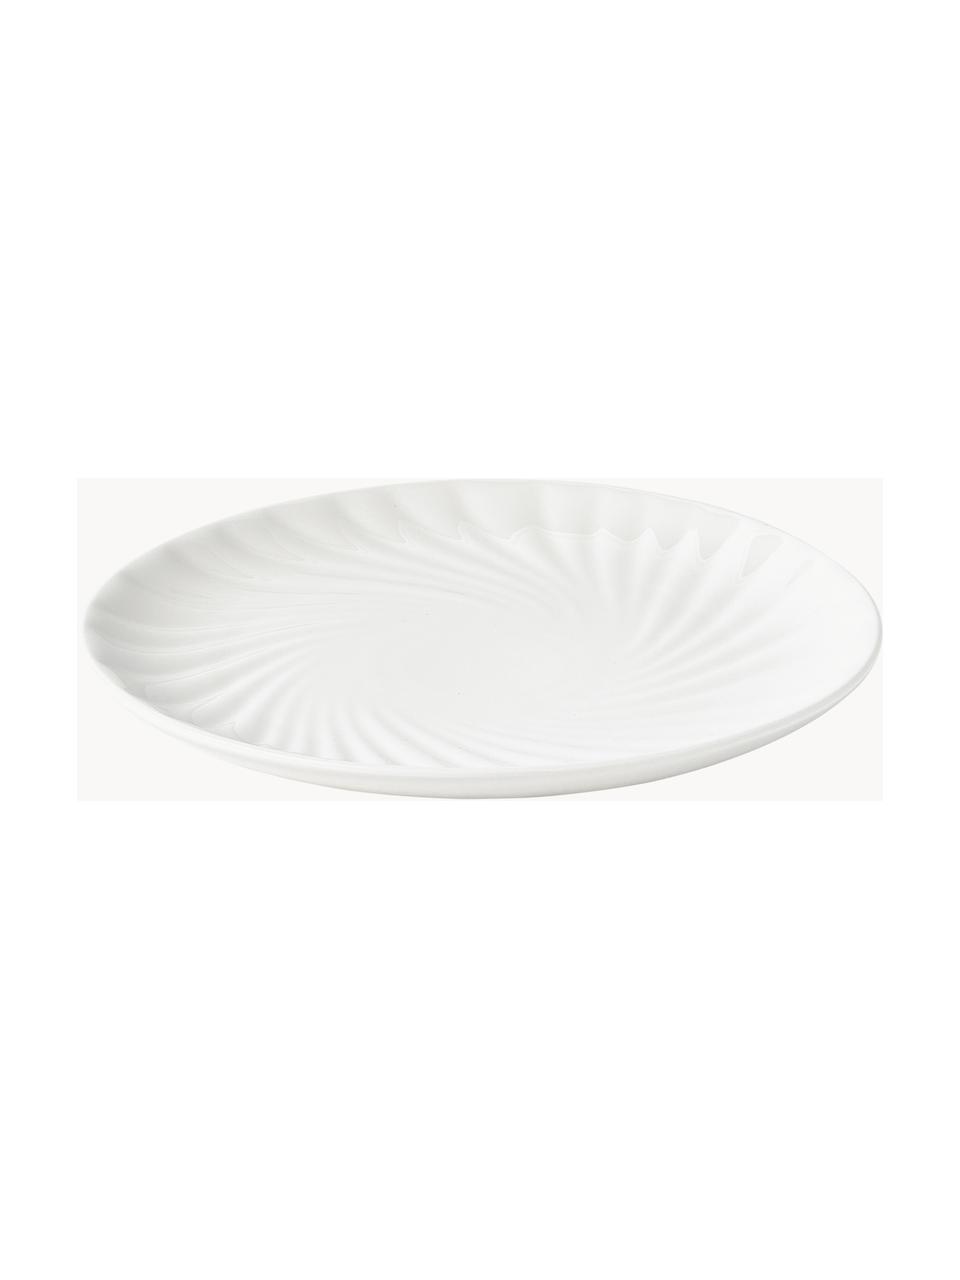 Servizio di piatti in porcellana Malina, 4 persone (12 pz), Porcellana, Bianco lucido, 4 persone (12 pz)